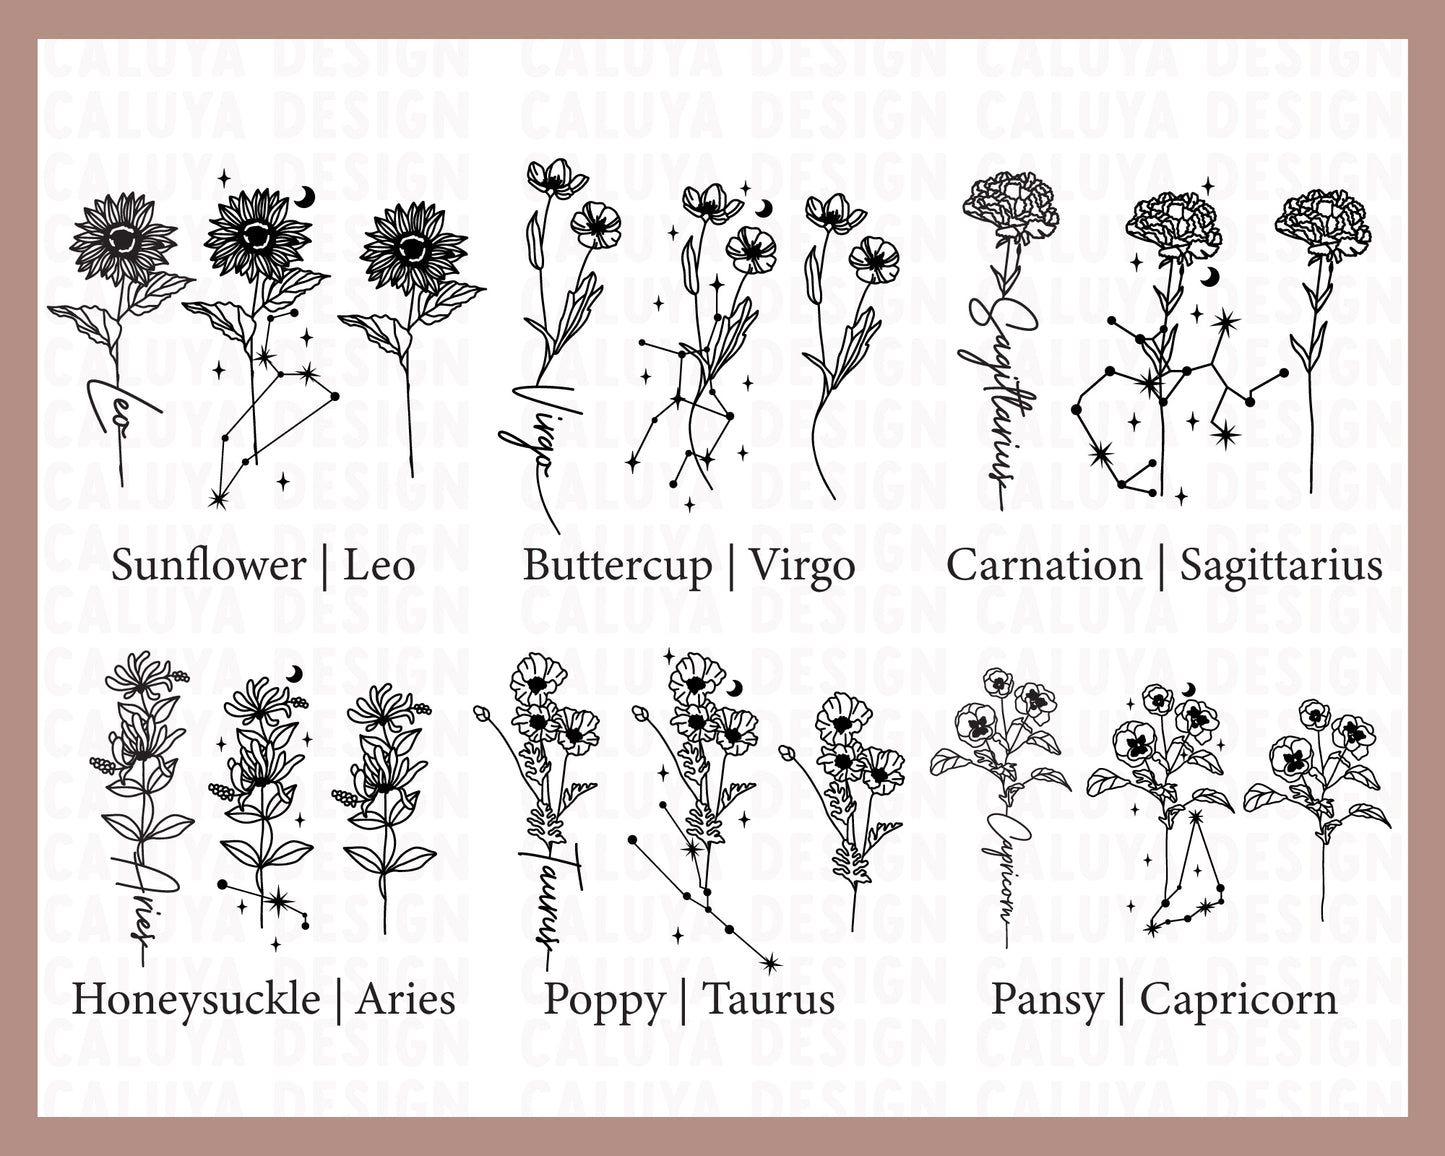 Zodiac Flower SVG Bundle | Birth Month Flower SVG Bundle